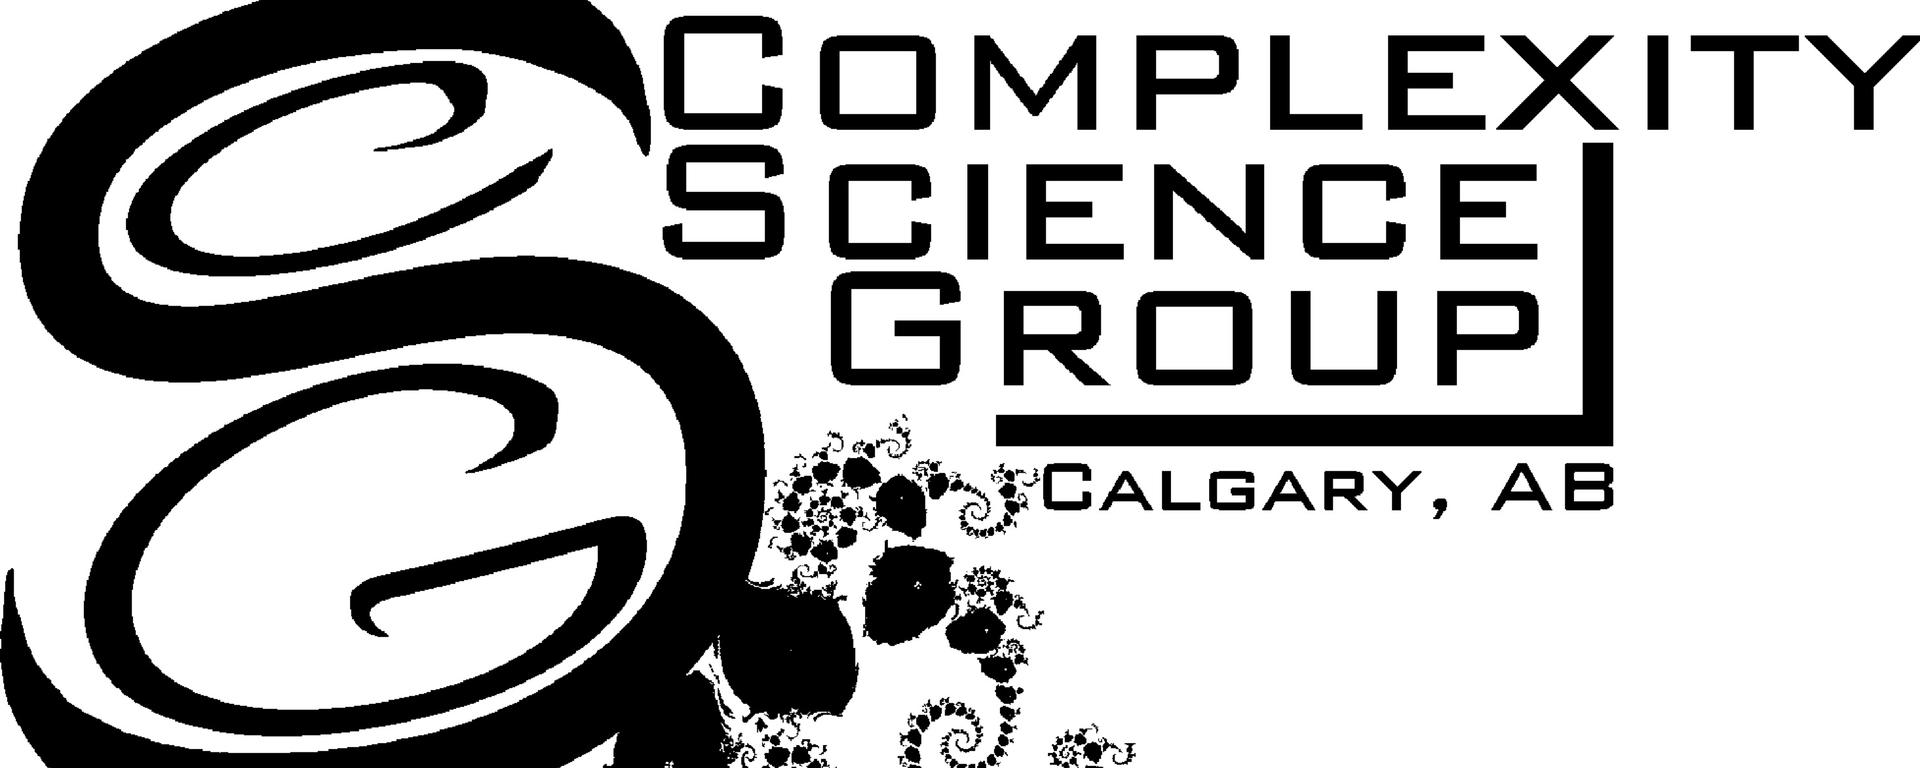 complexity logo